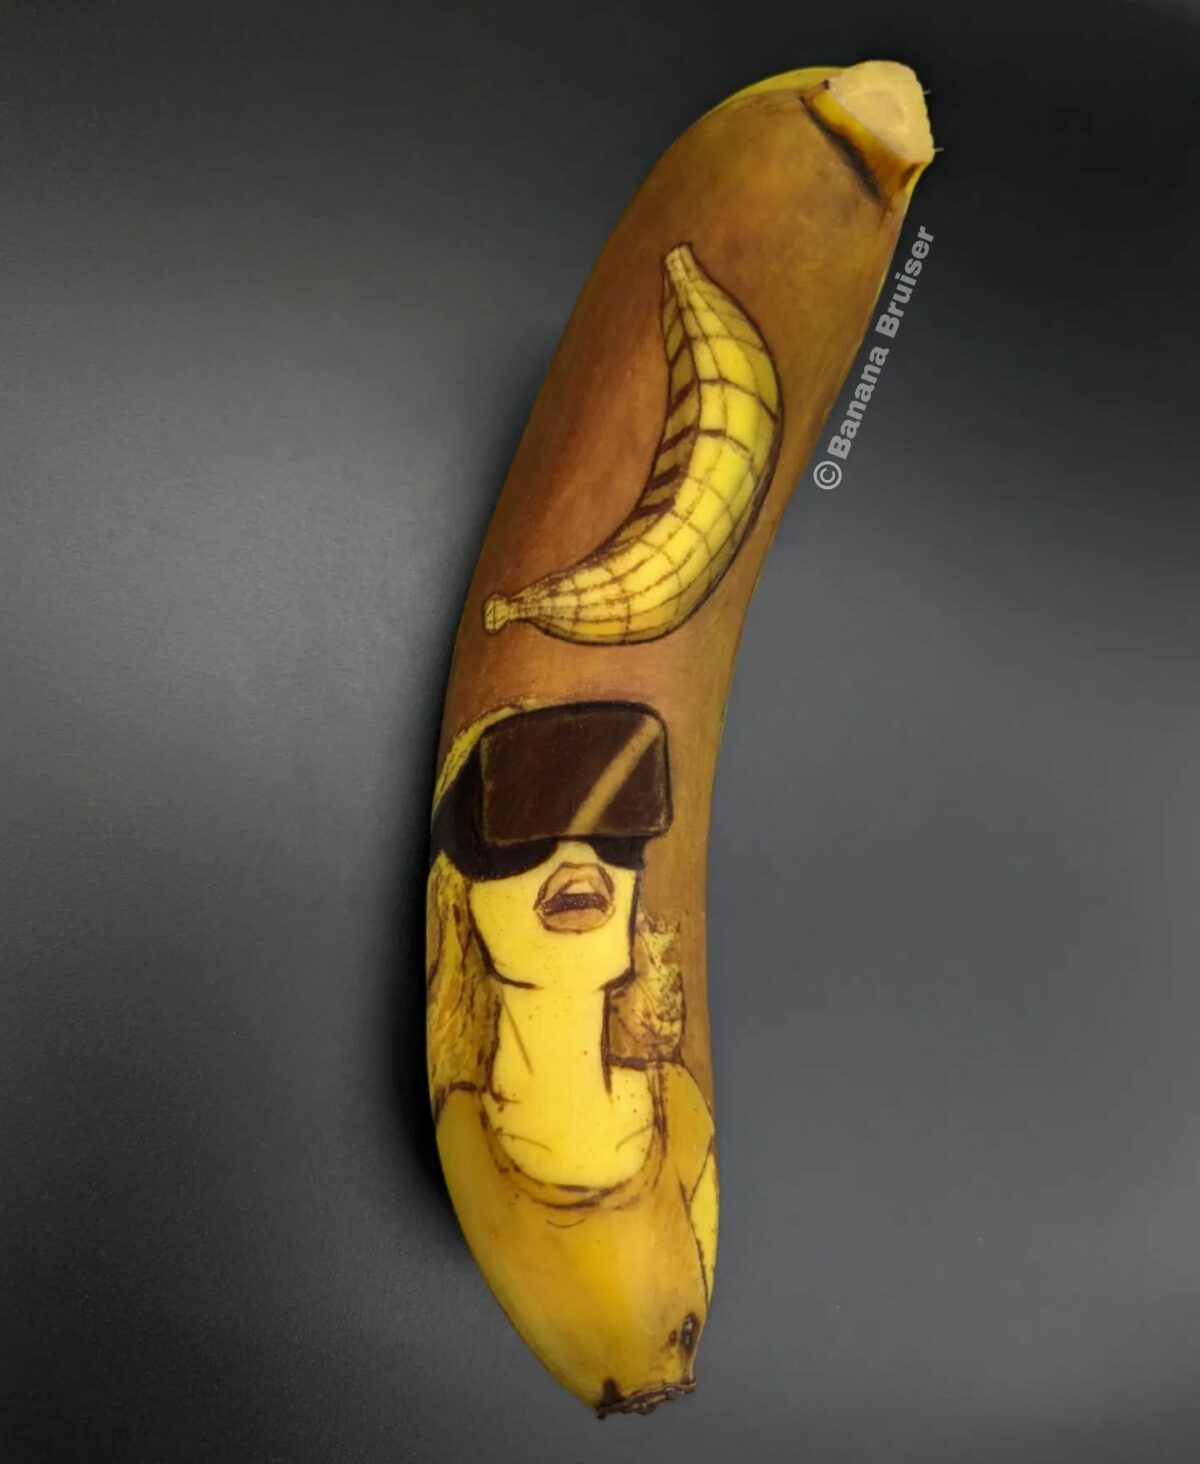 The Bruised Banana Art Of Anna Chojnicka 2